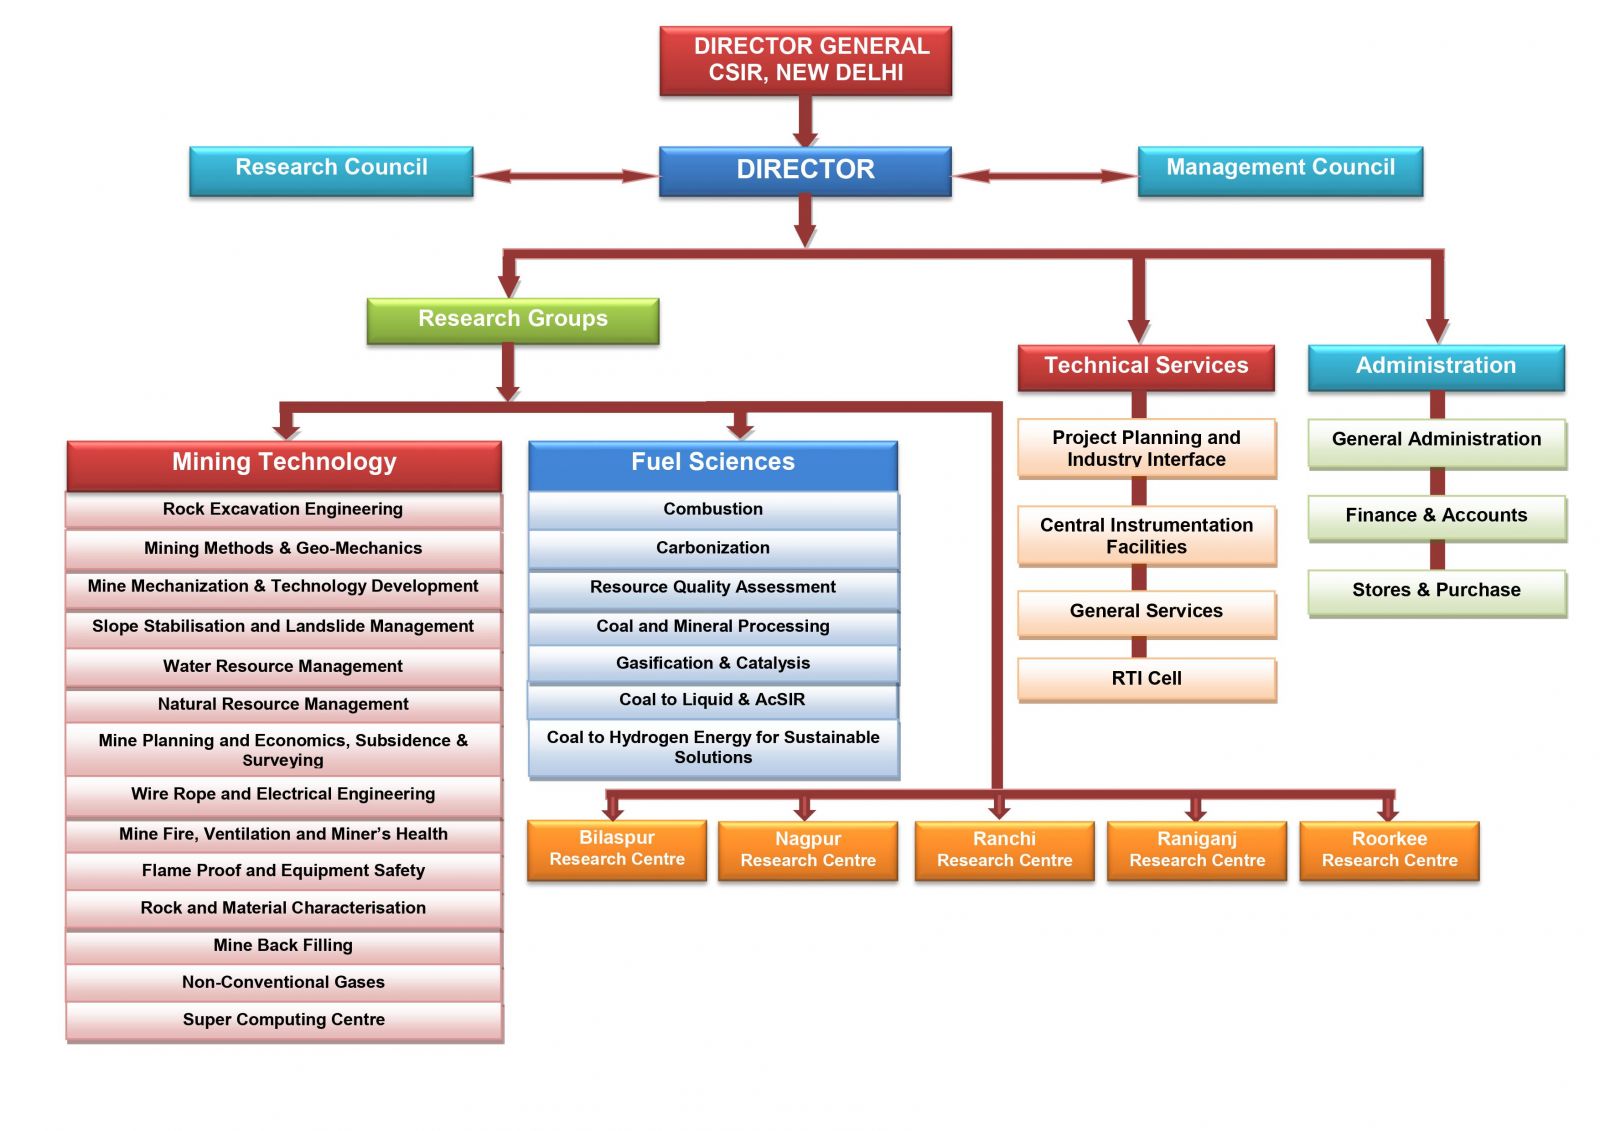 CIMFR - Organization Structure